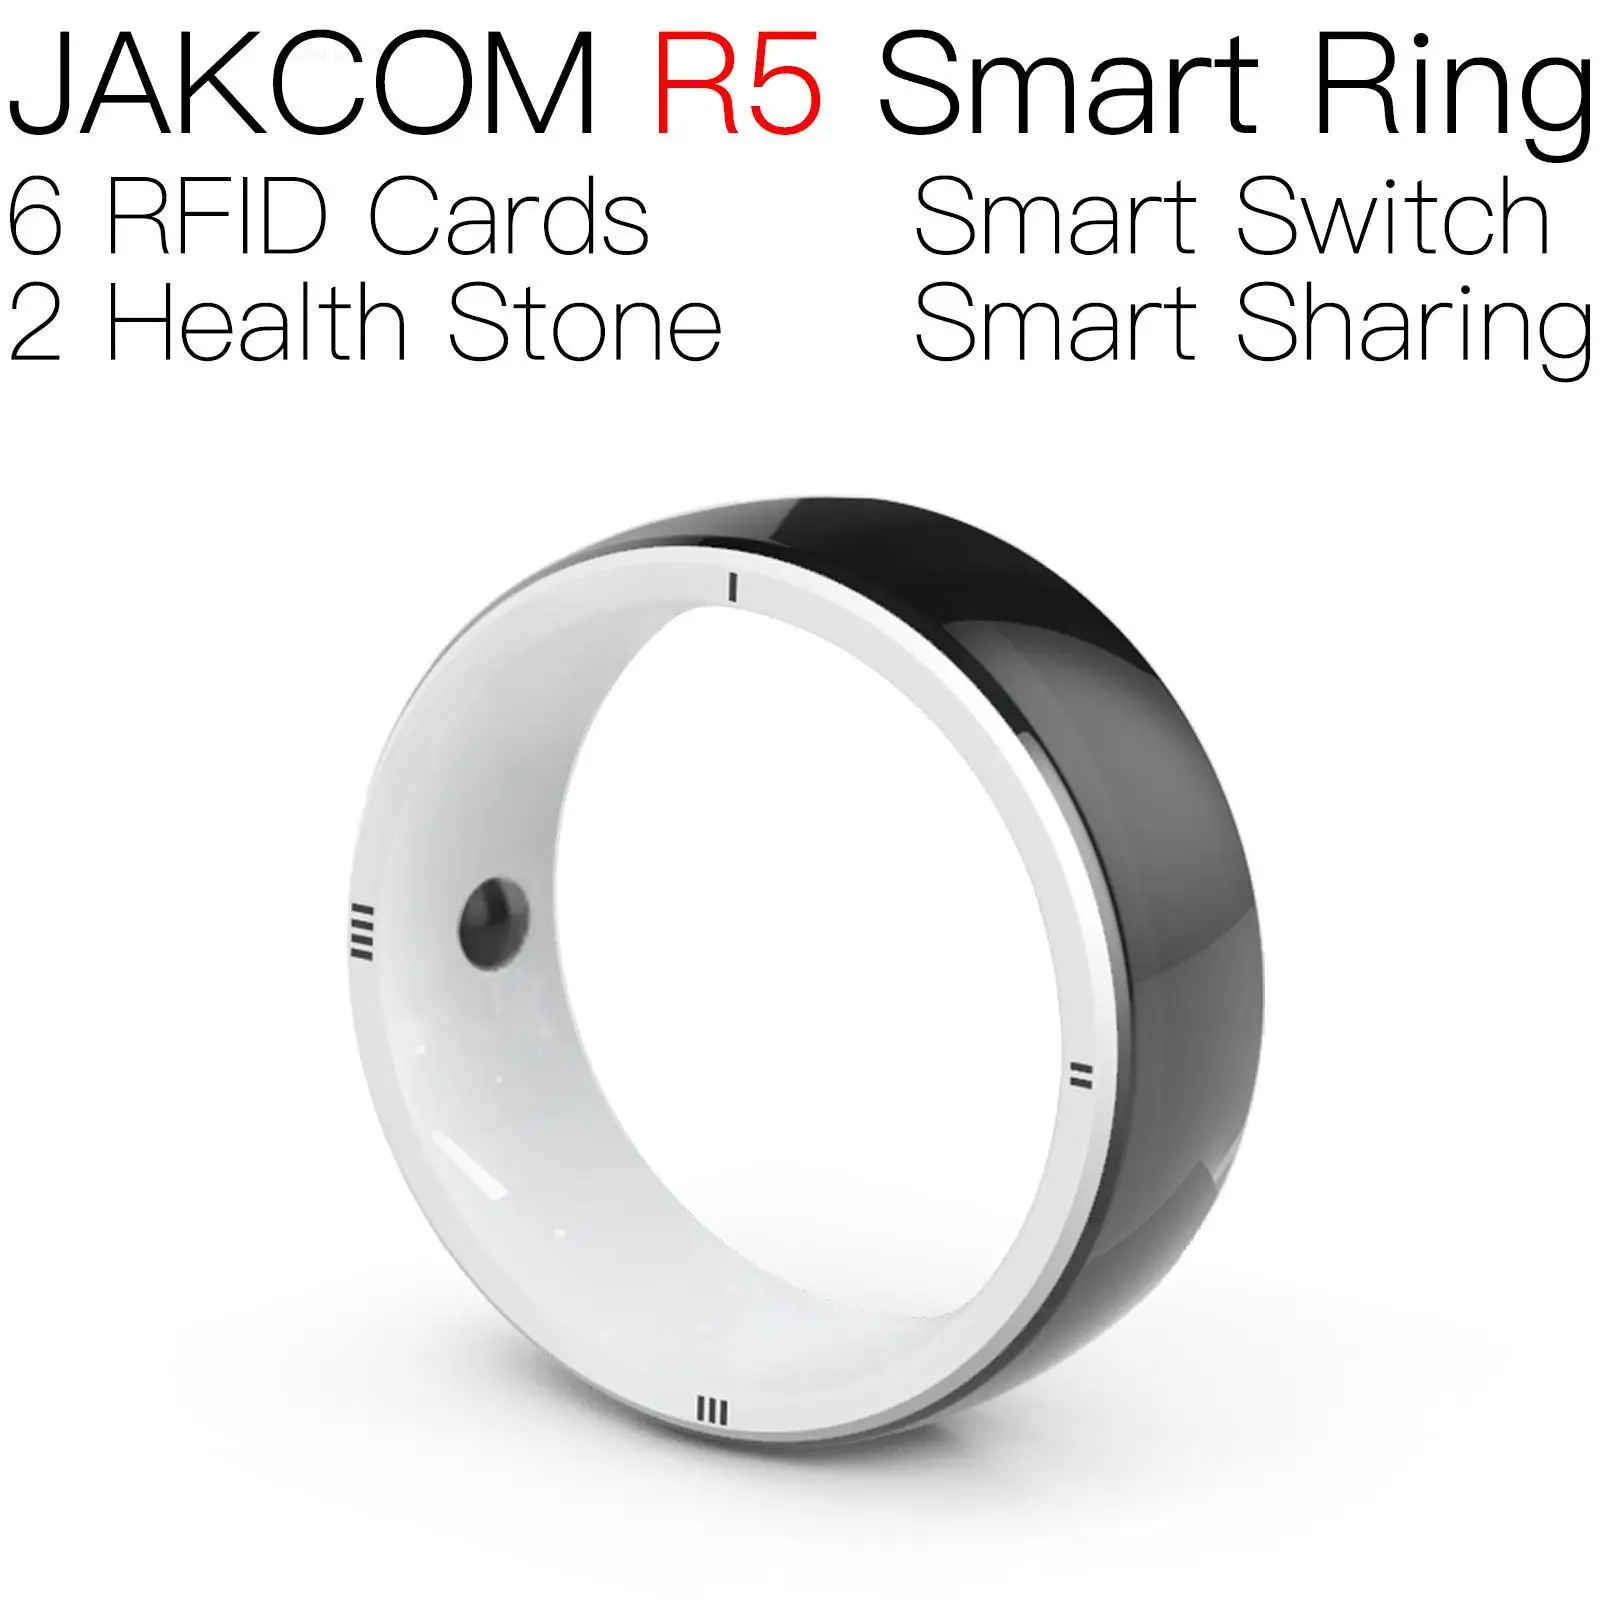 

JAKCOM R5 Smart Ring Super value as ic card emv chip globe neflix 1 flipper zero nfc cloner asset key 20 pcs rfid